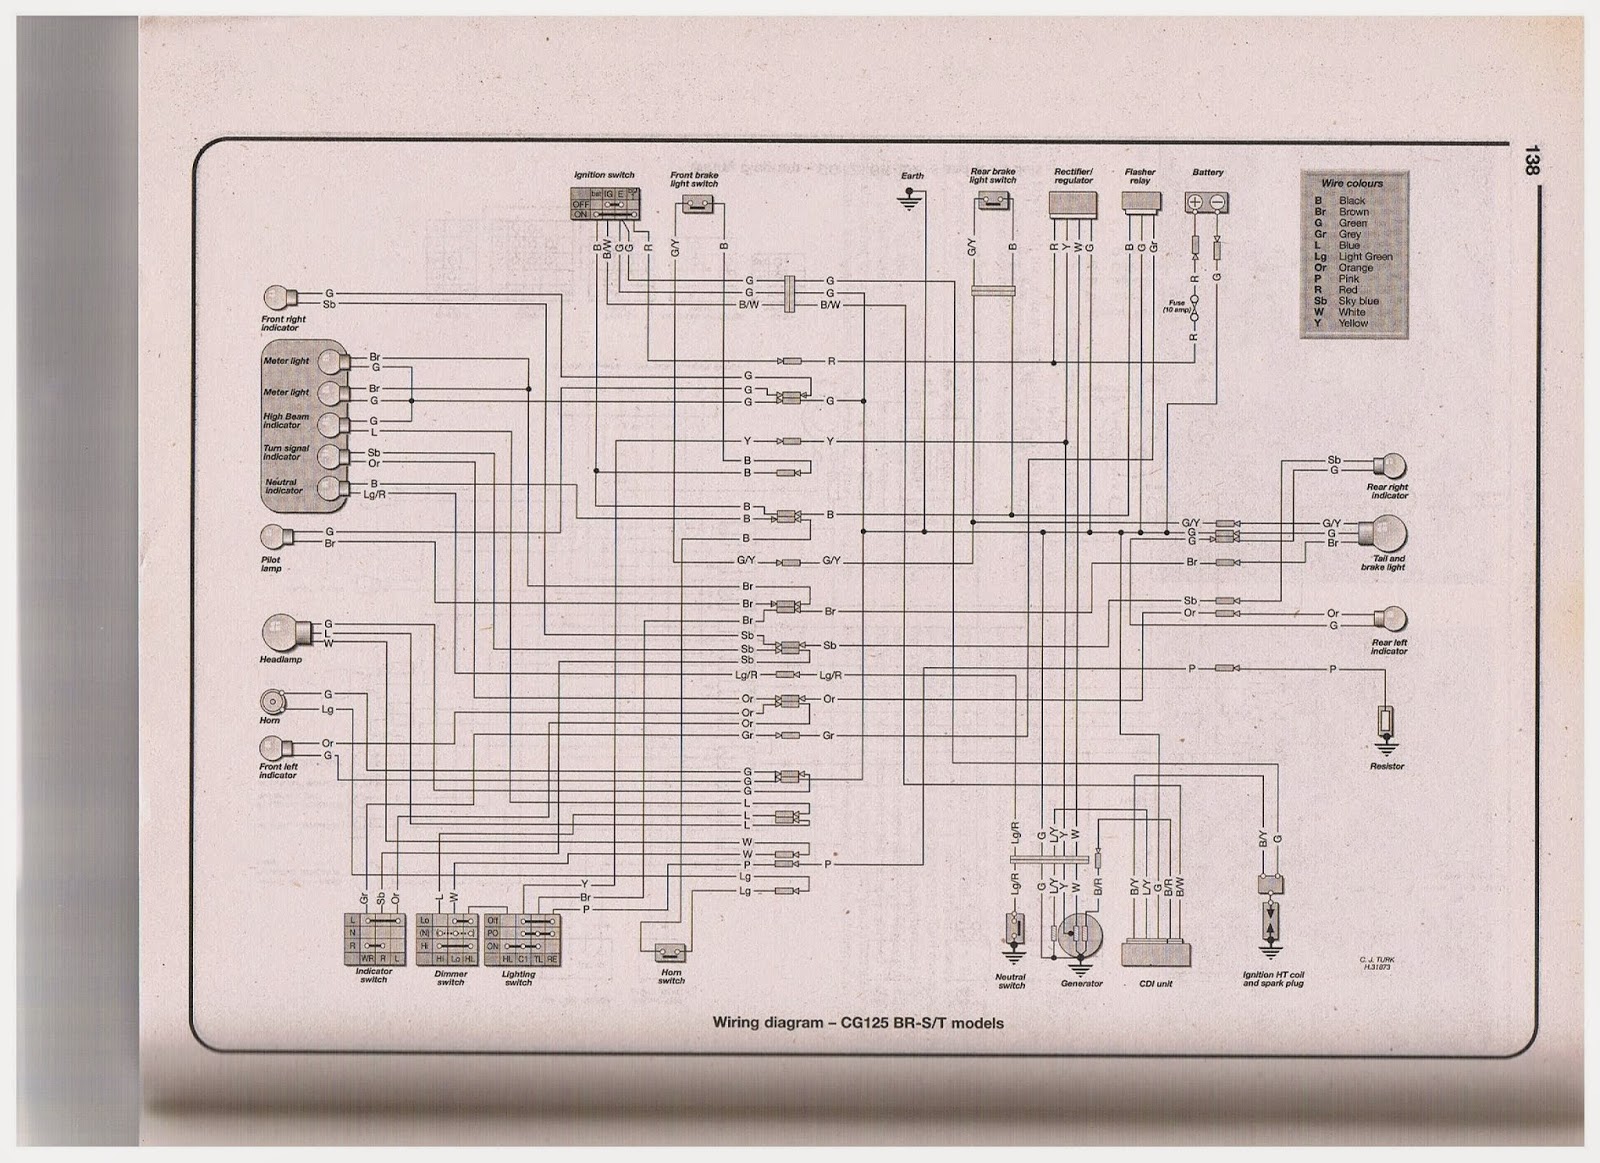 Honda CG 125 Owner Blog : Honda CG 125 wiring diagrams and electrical post